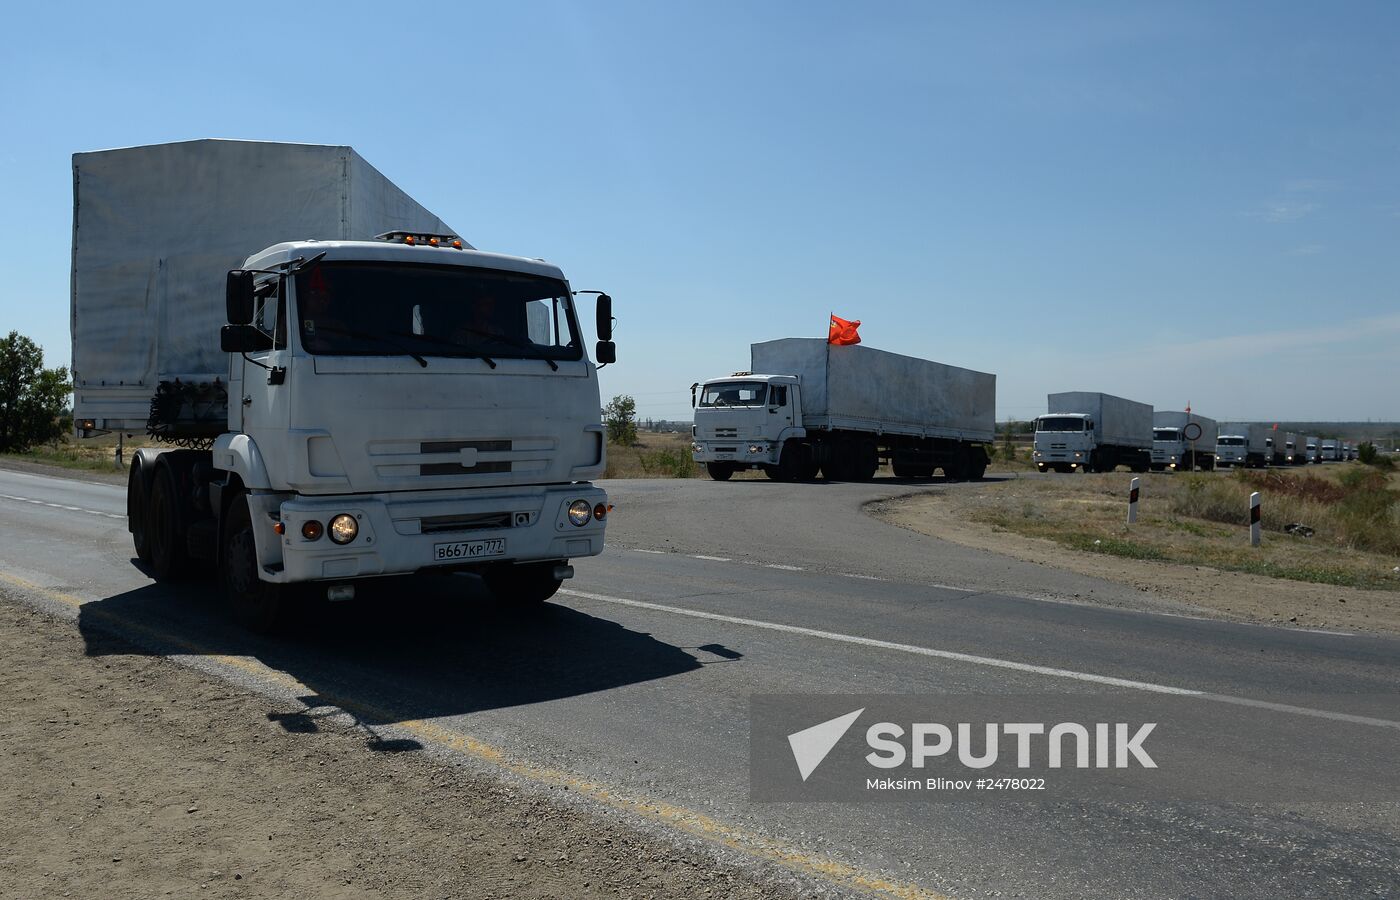 Russian humanitarian convoy trucks arrive at checkpoint at Russian-Ukrainian border